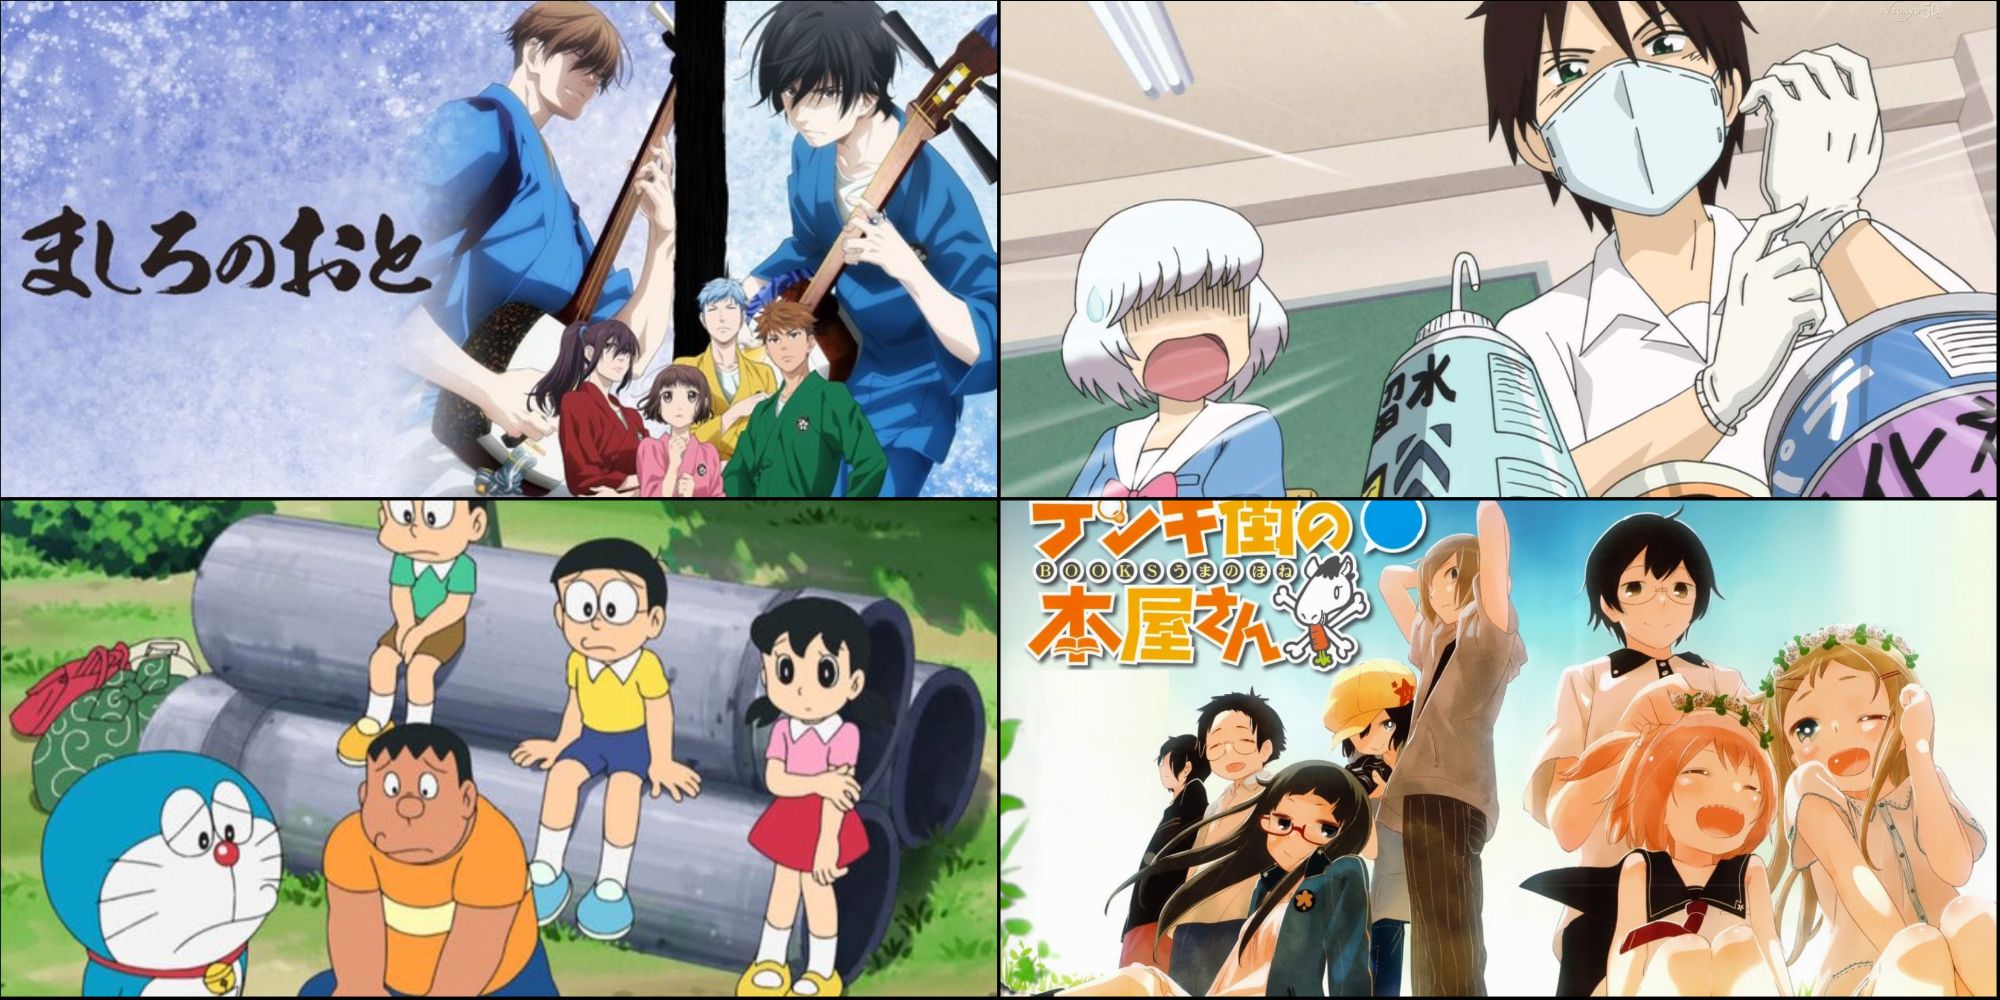 Top Shin-Ei Animation shows